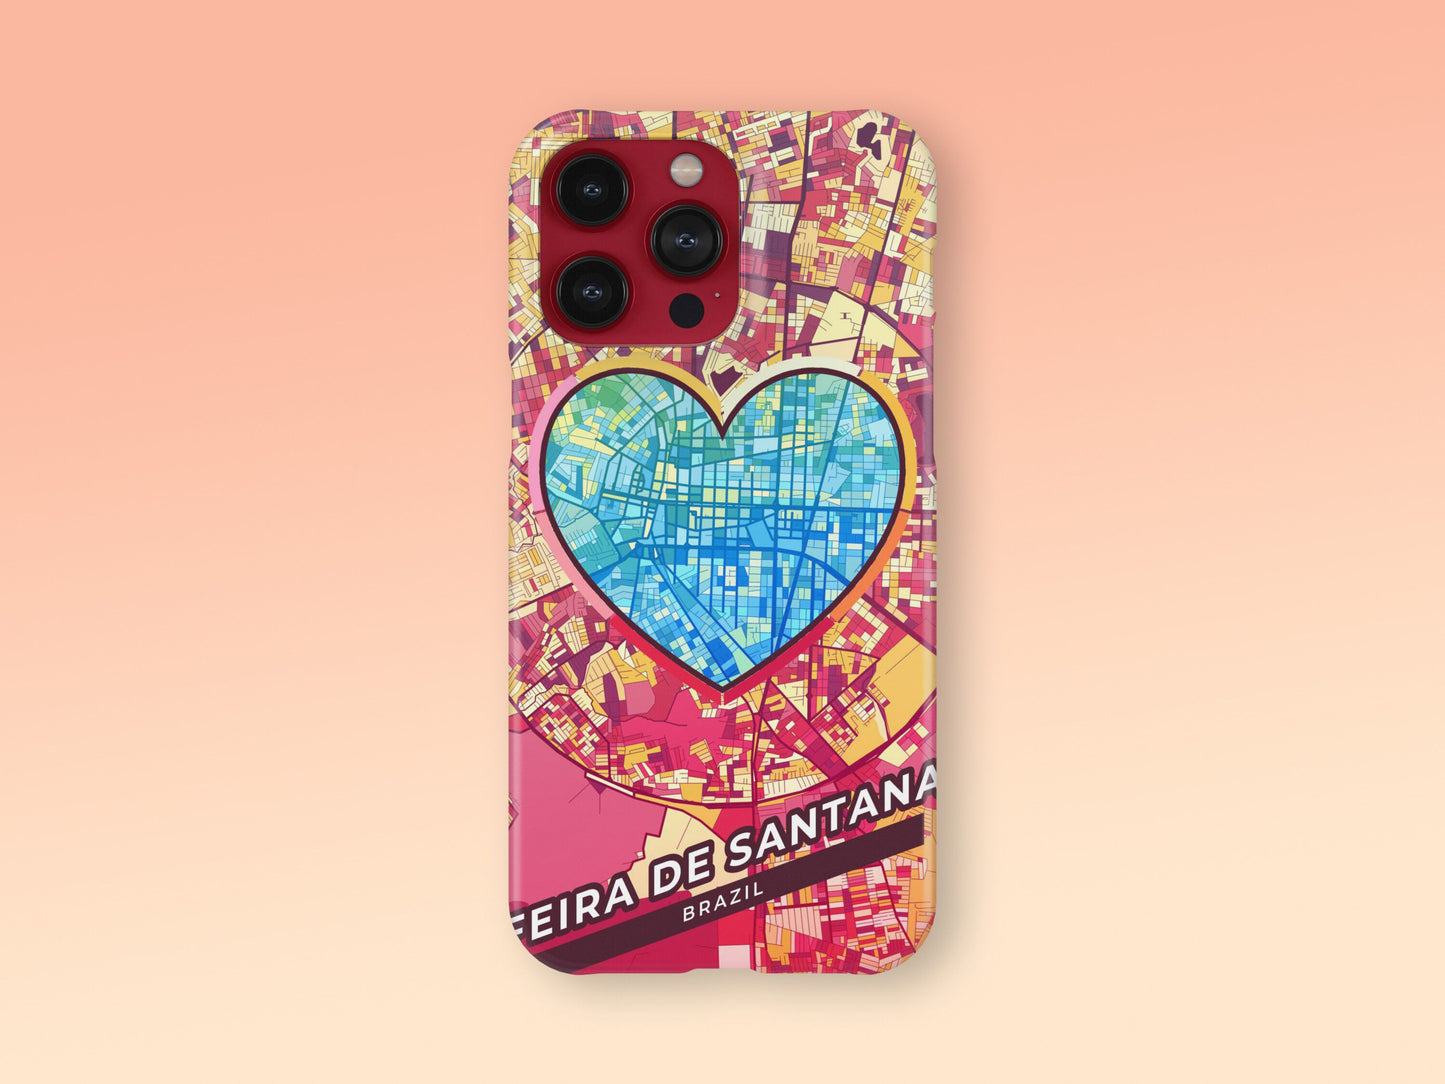 Feira De Santana Brazil slim phone case with colorful icon. Birthday, wedding or housewarming gift. Couple match cases. 2